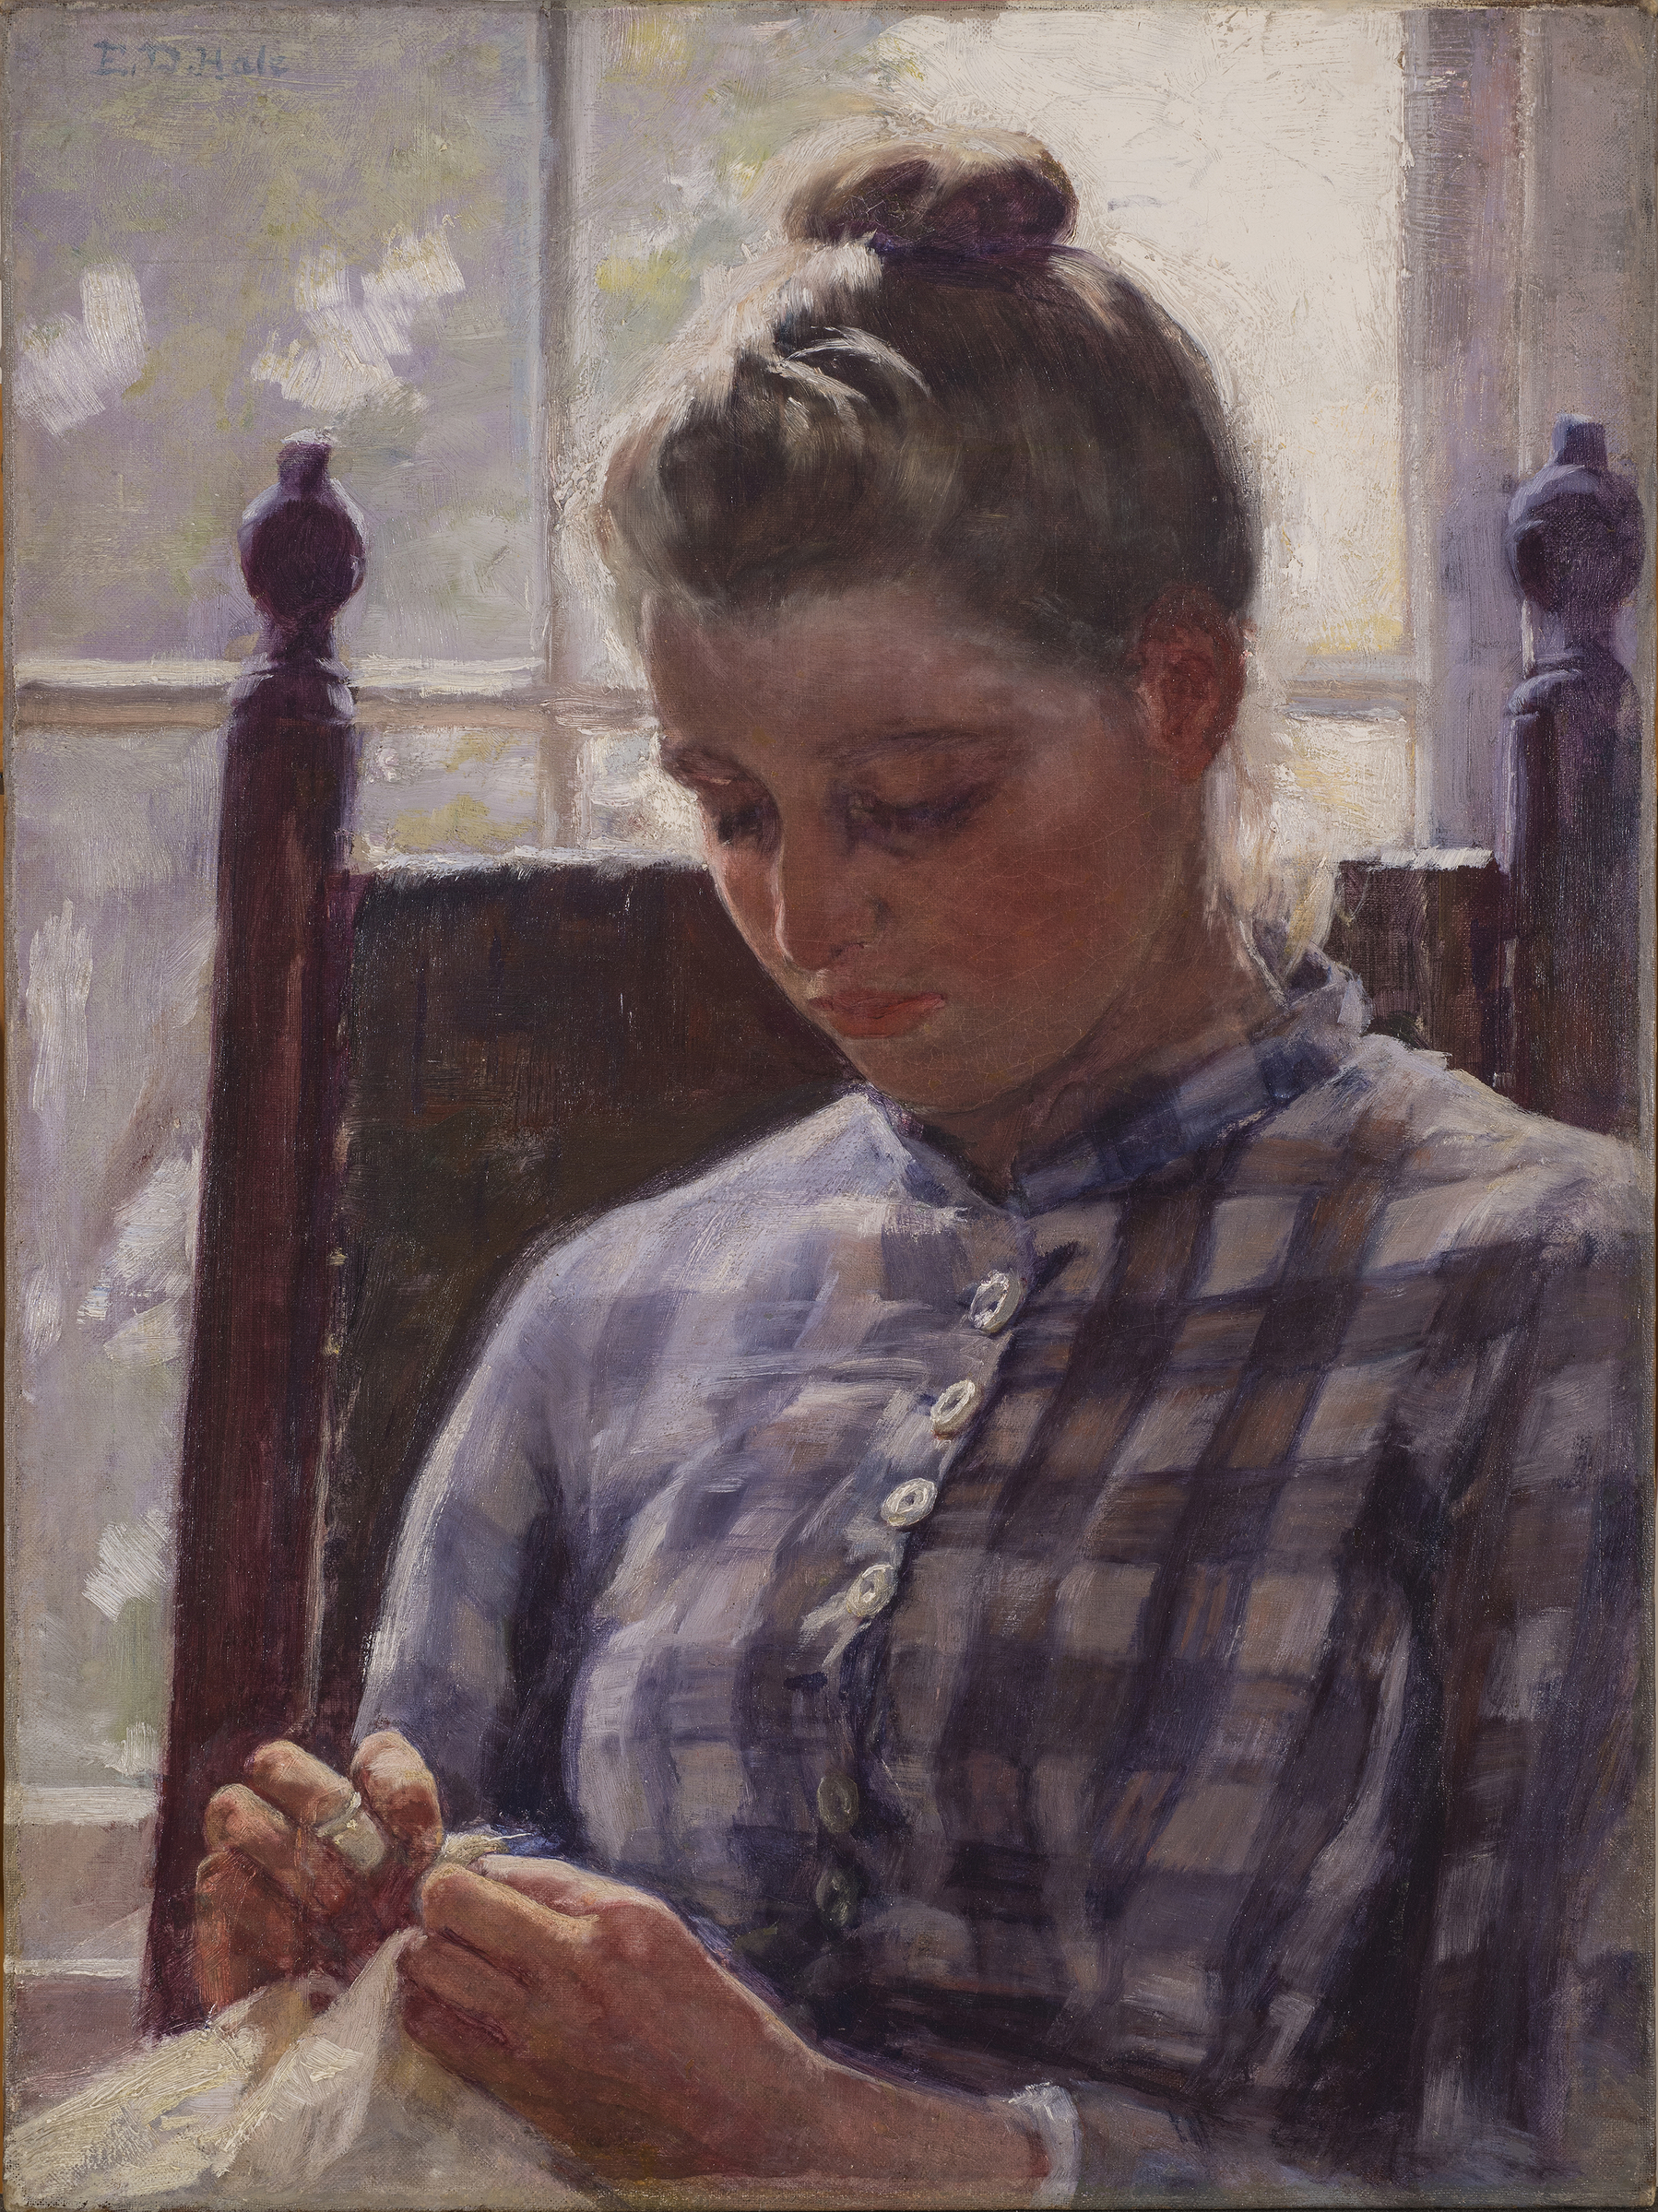 June by Ellen Day Hale - ca. 1893 - 24 x 18 1/8 in National Museum of Women in the Arts